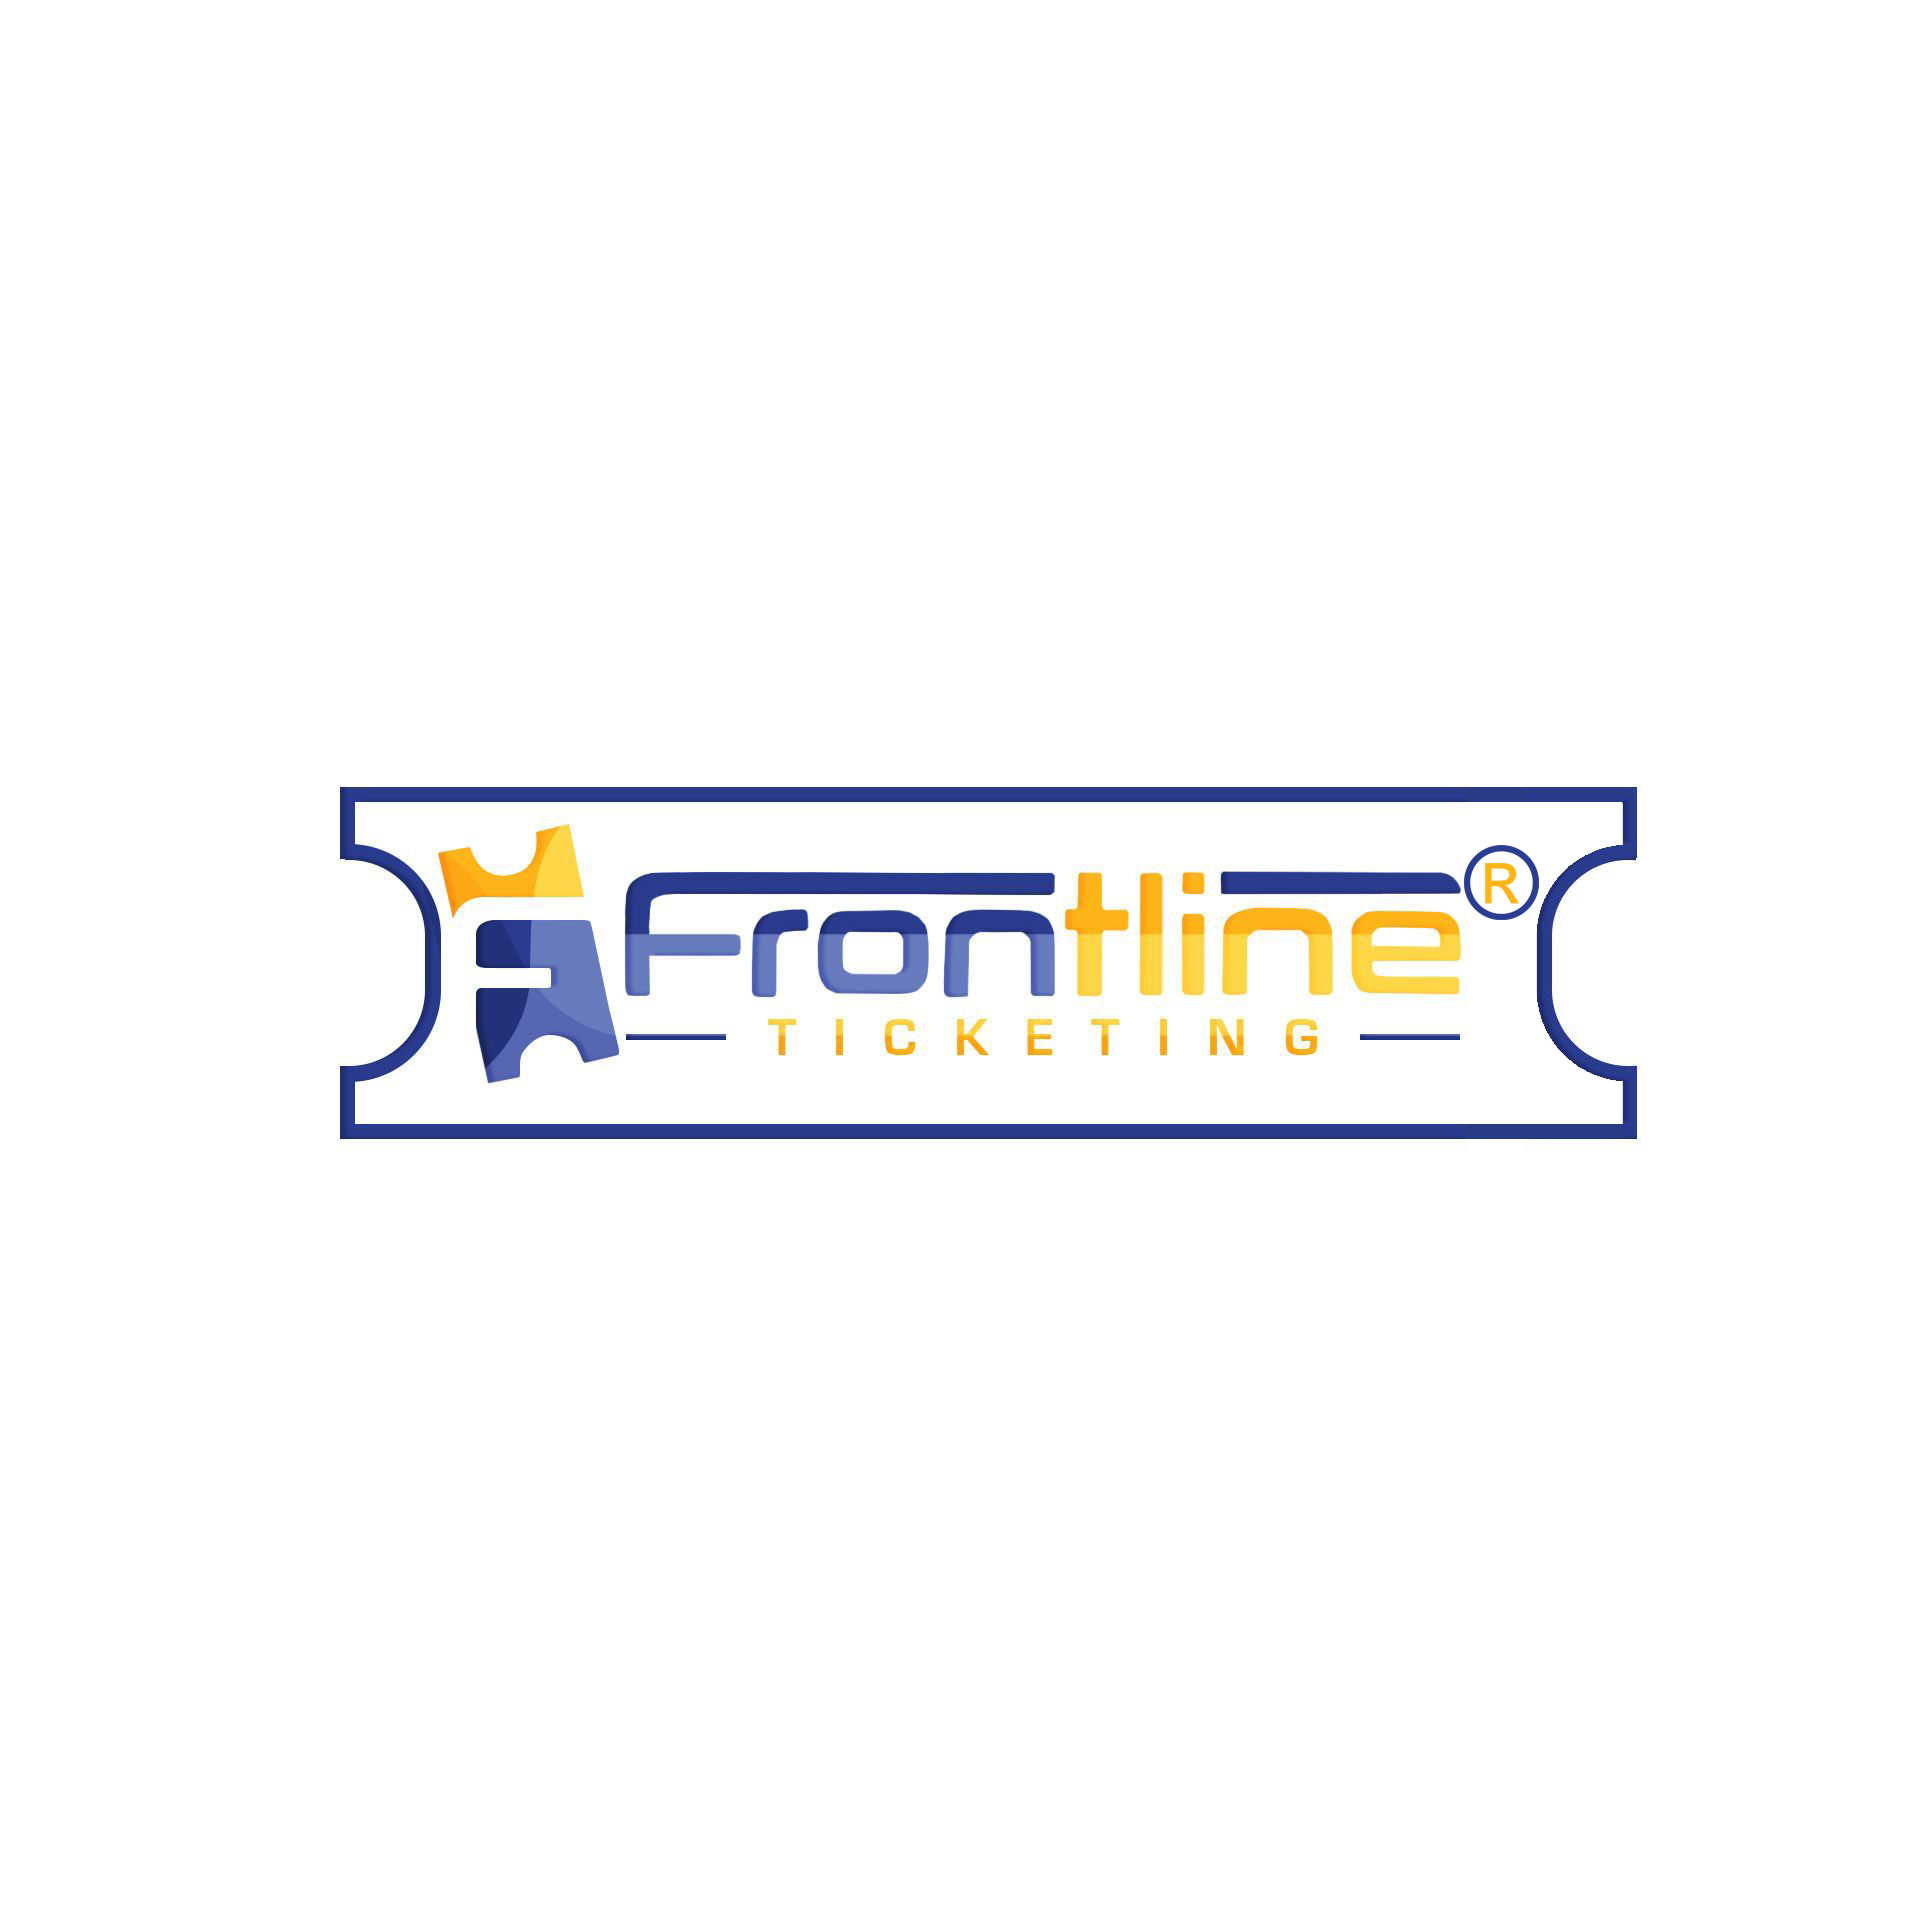 Frontline Ticketing - Frontline Ticketing